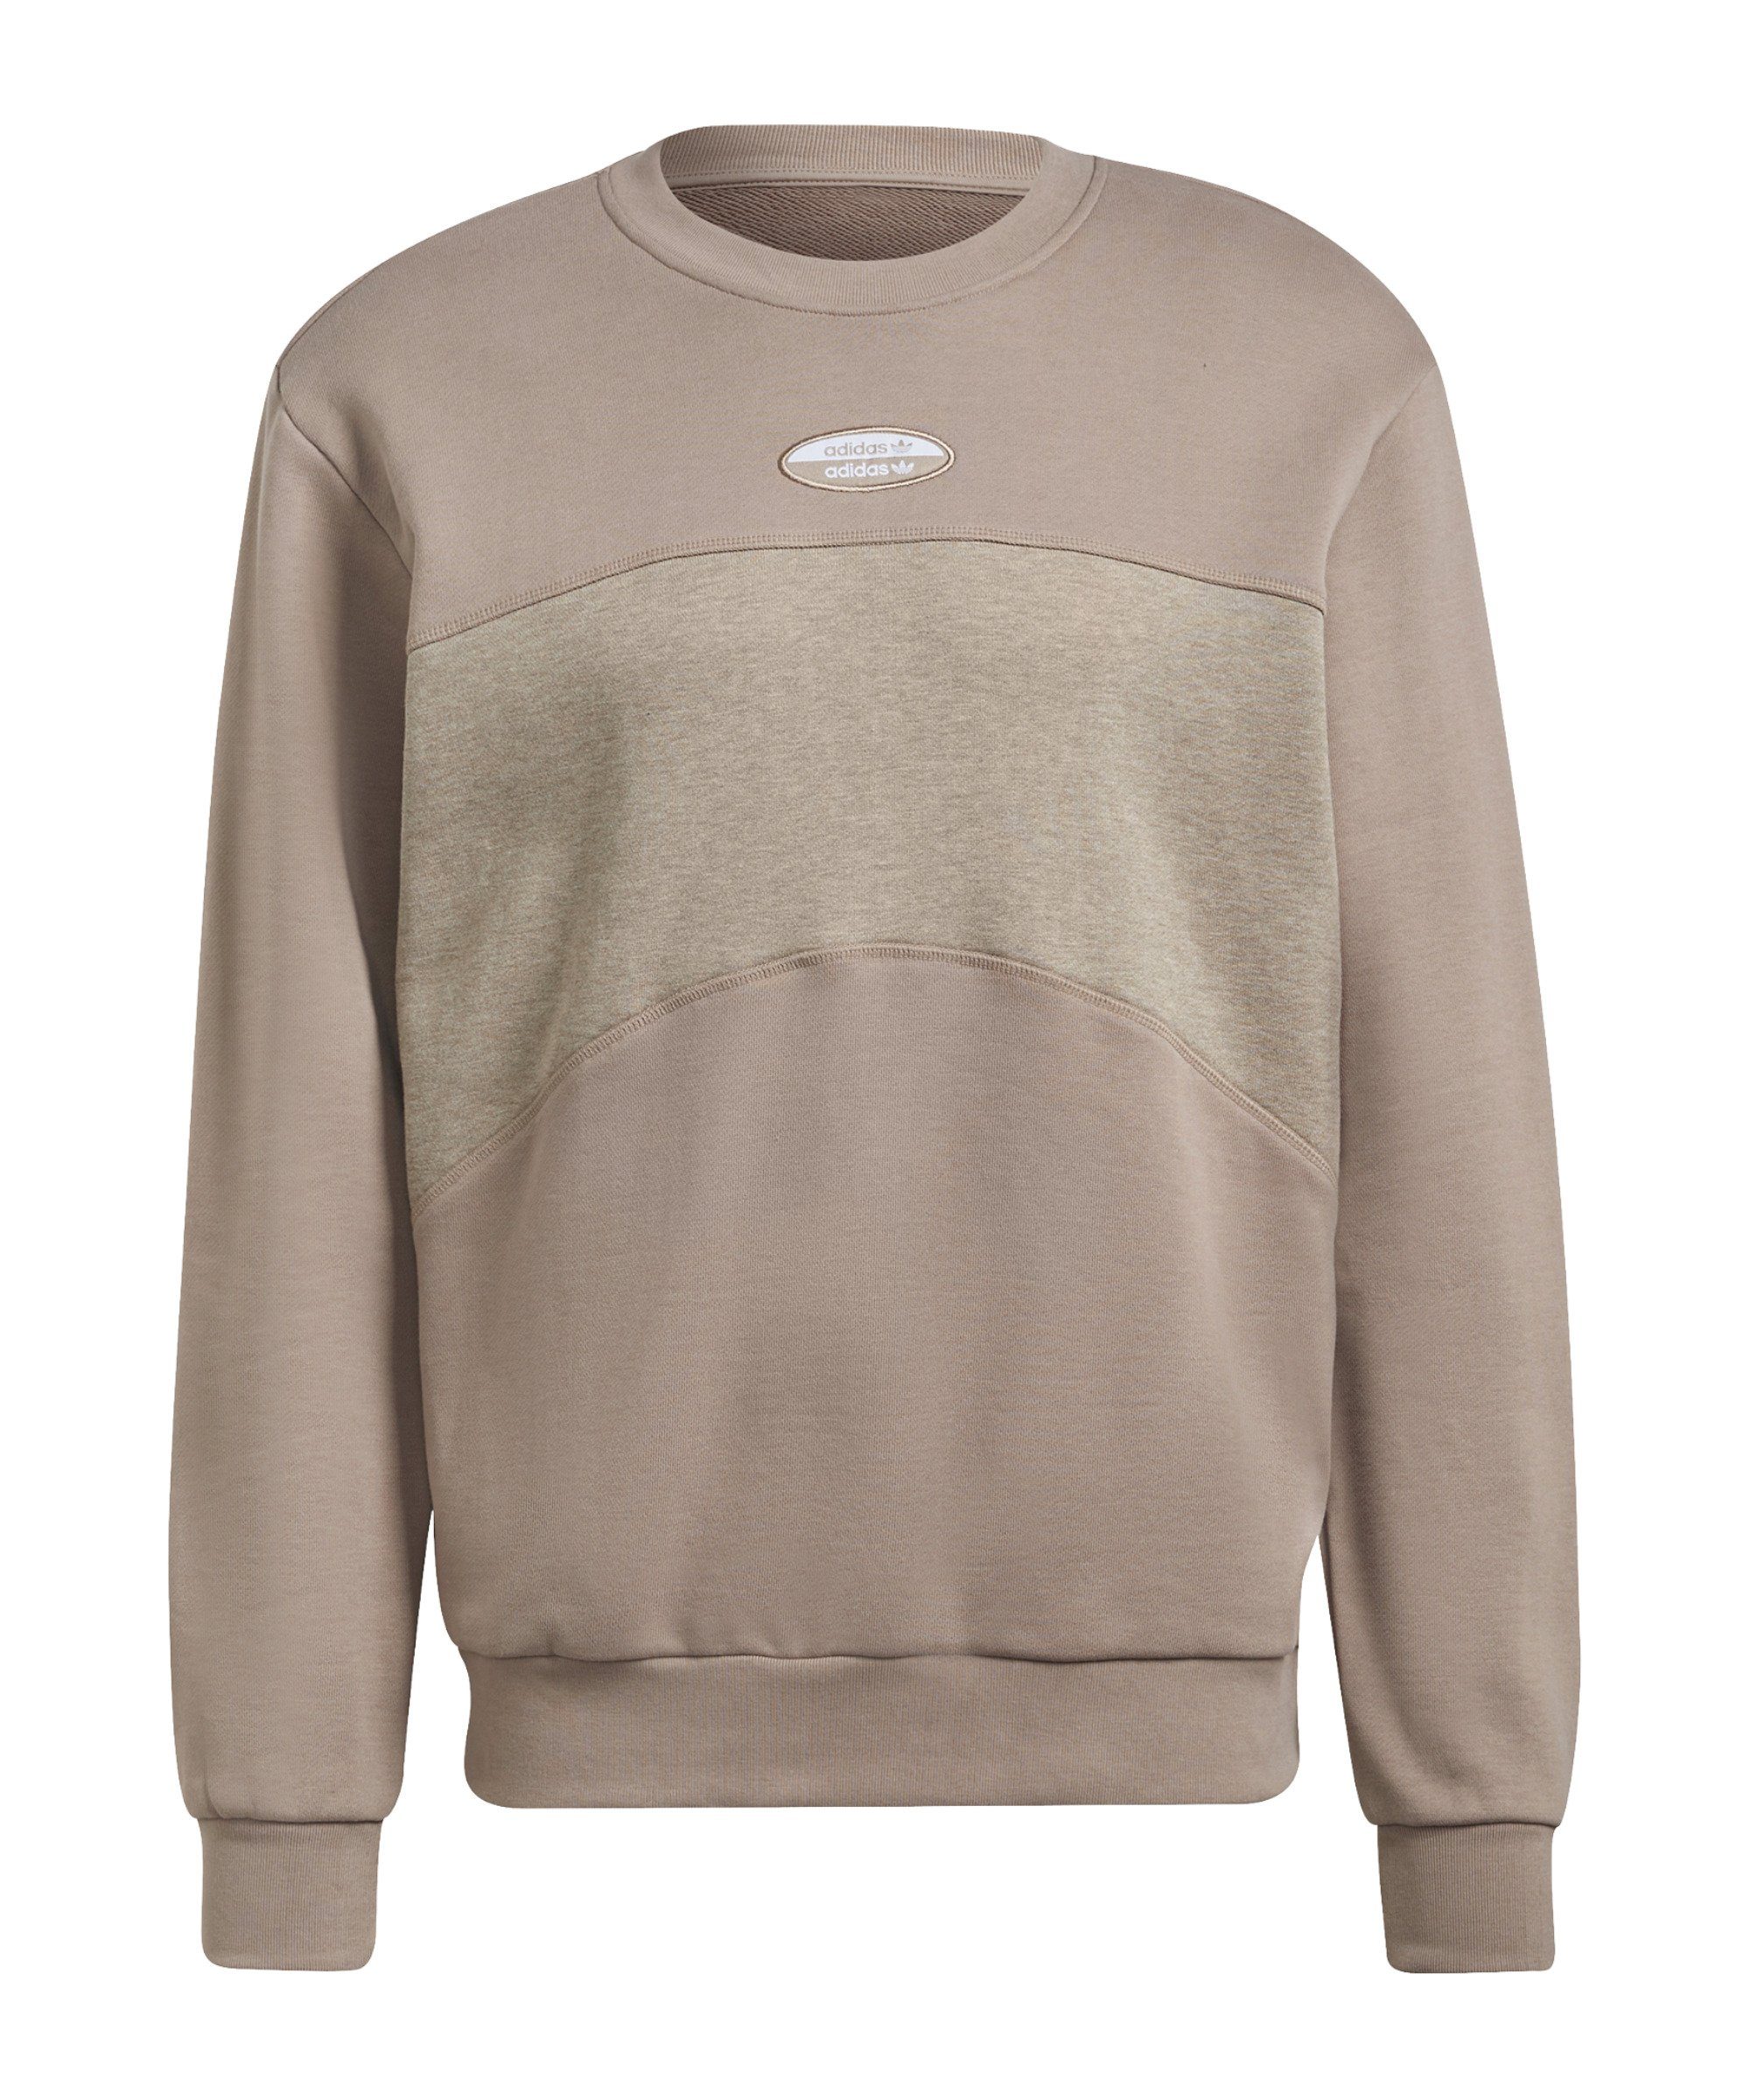 Originals Crew Essential Sweatshirt Sweatsihrt adidas